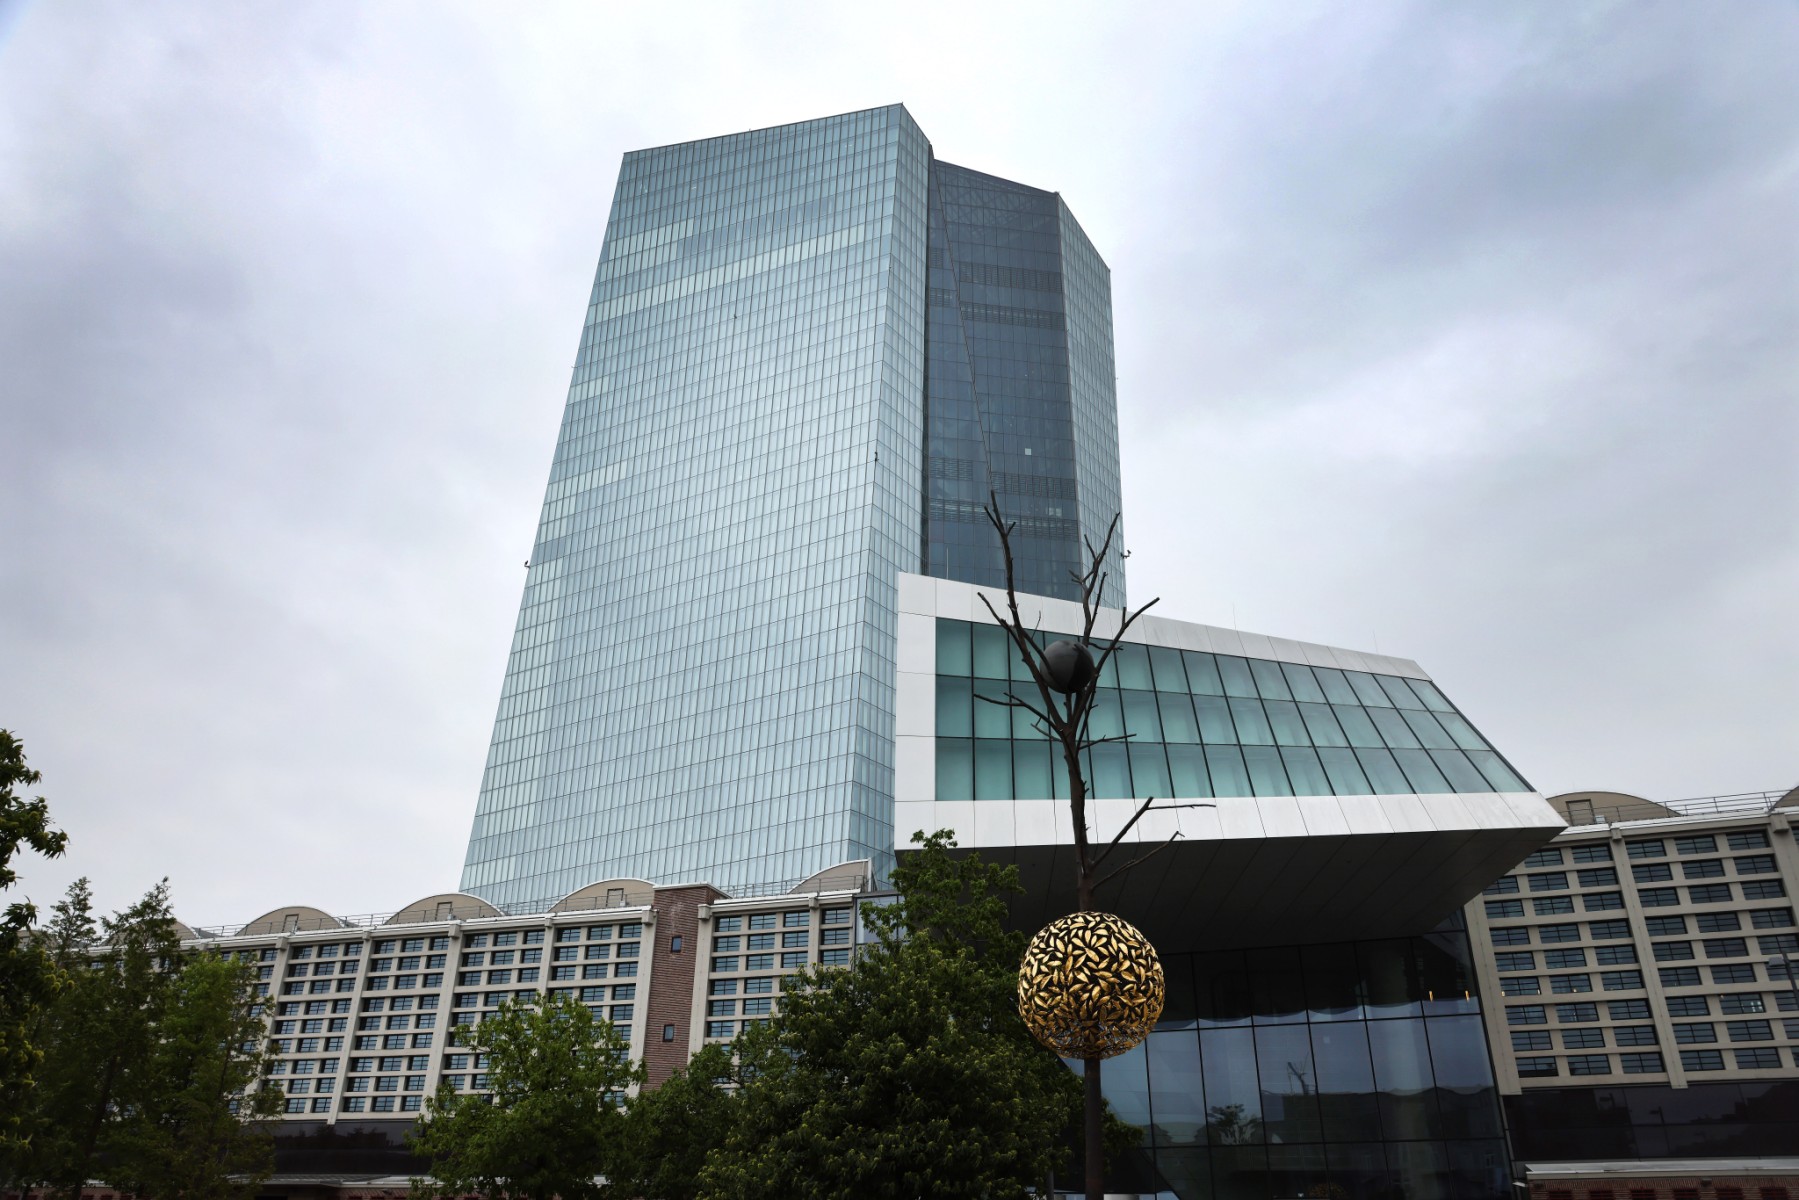 Sber tops European financial brands in brand finance ranking